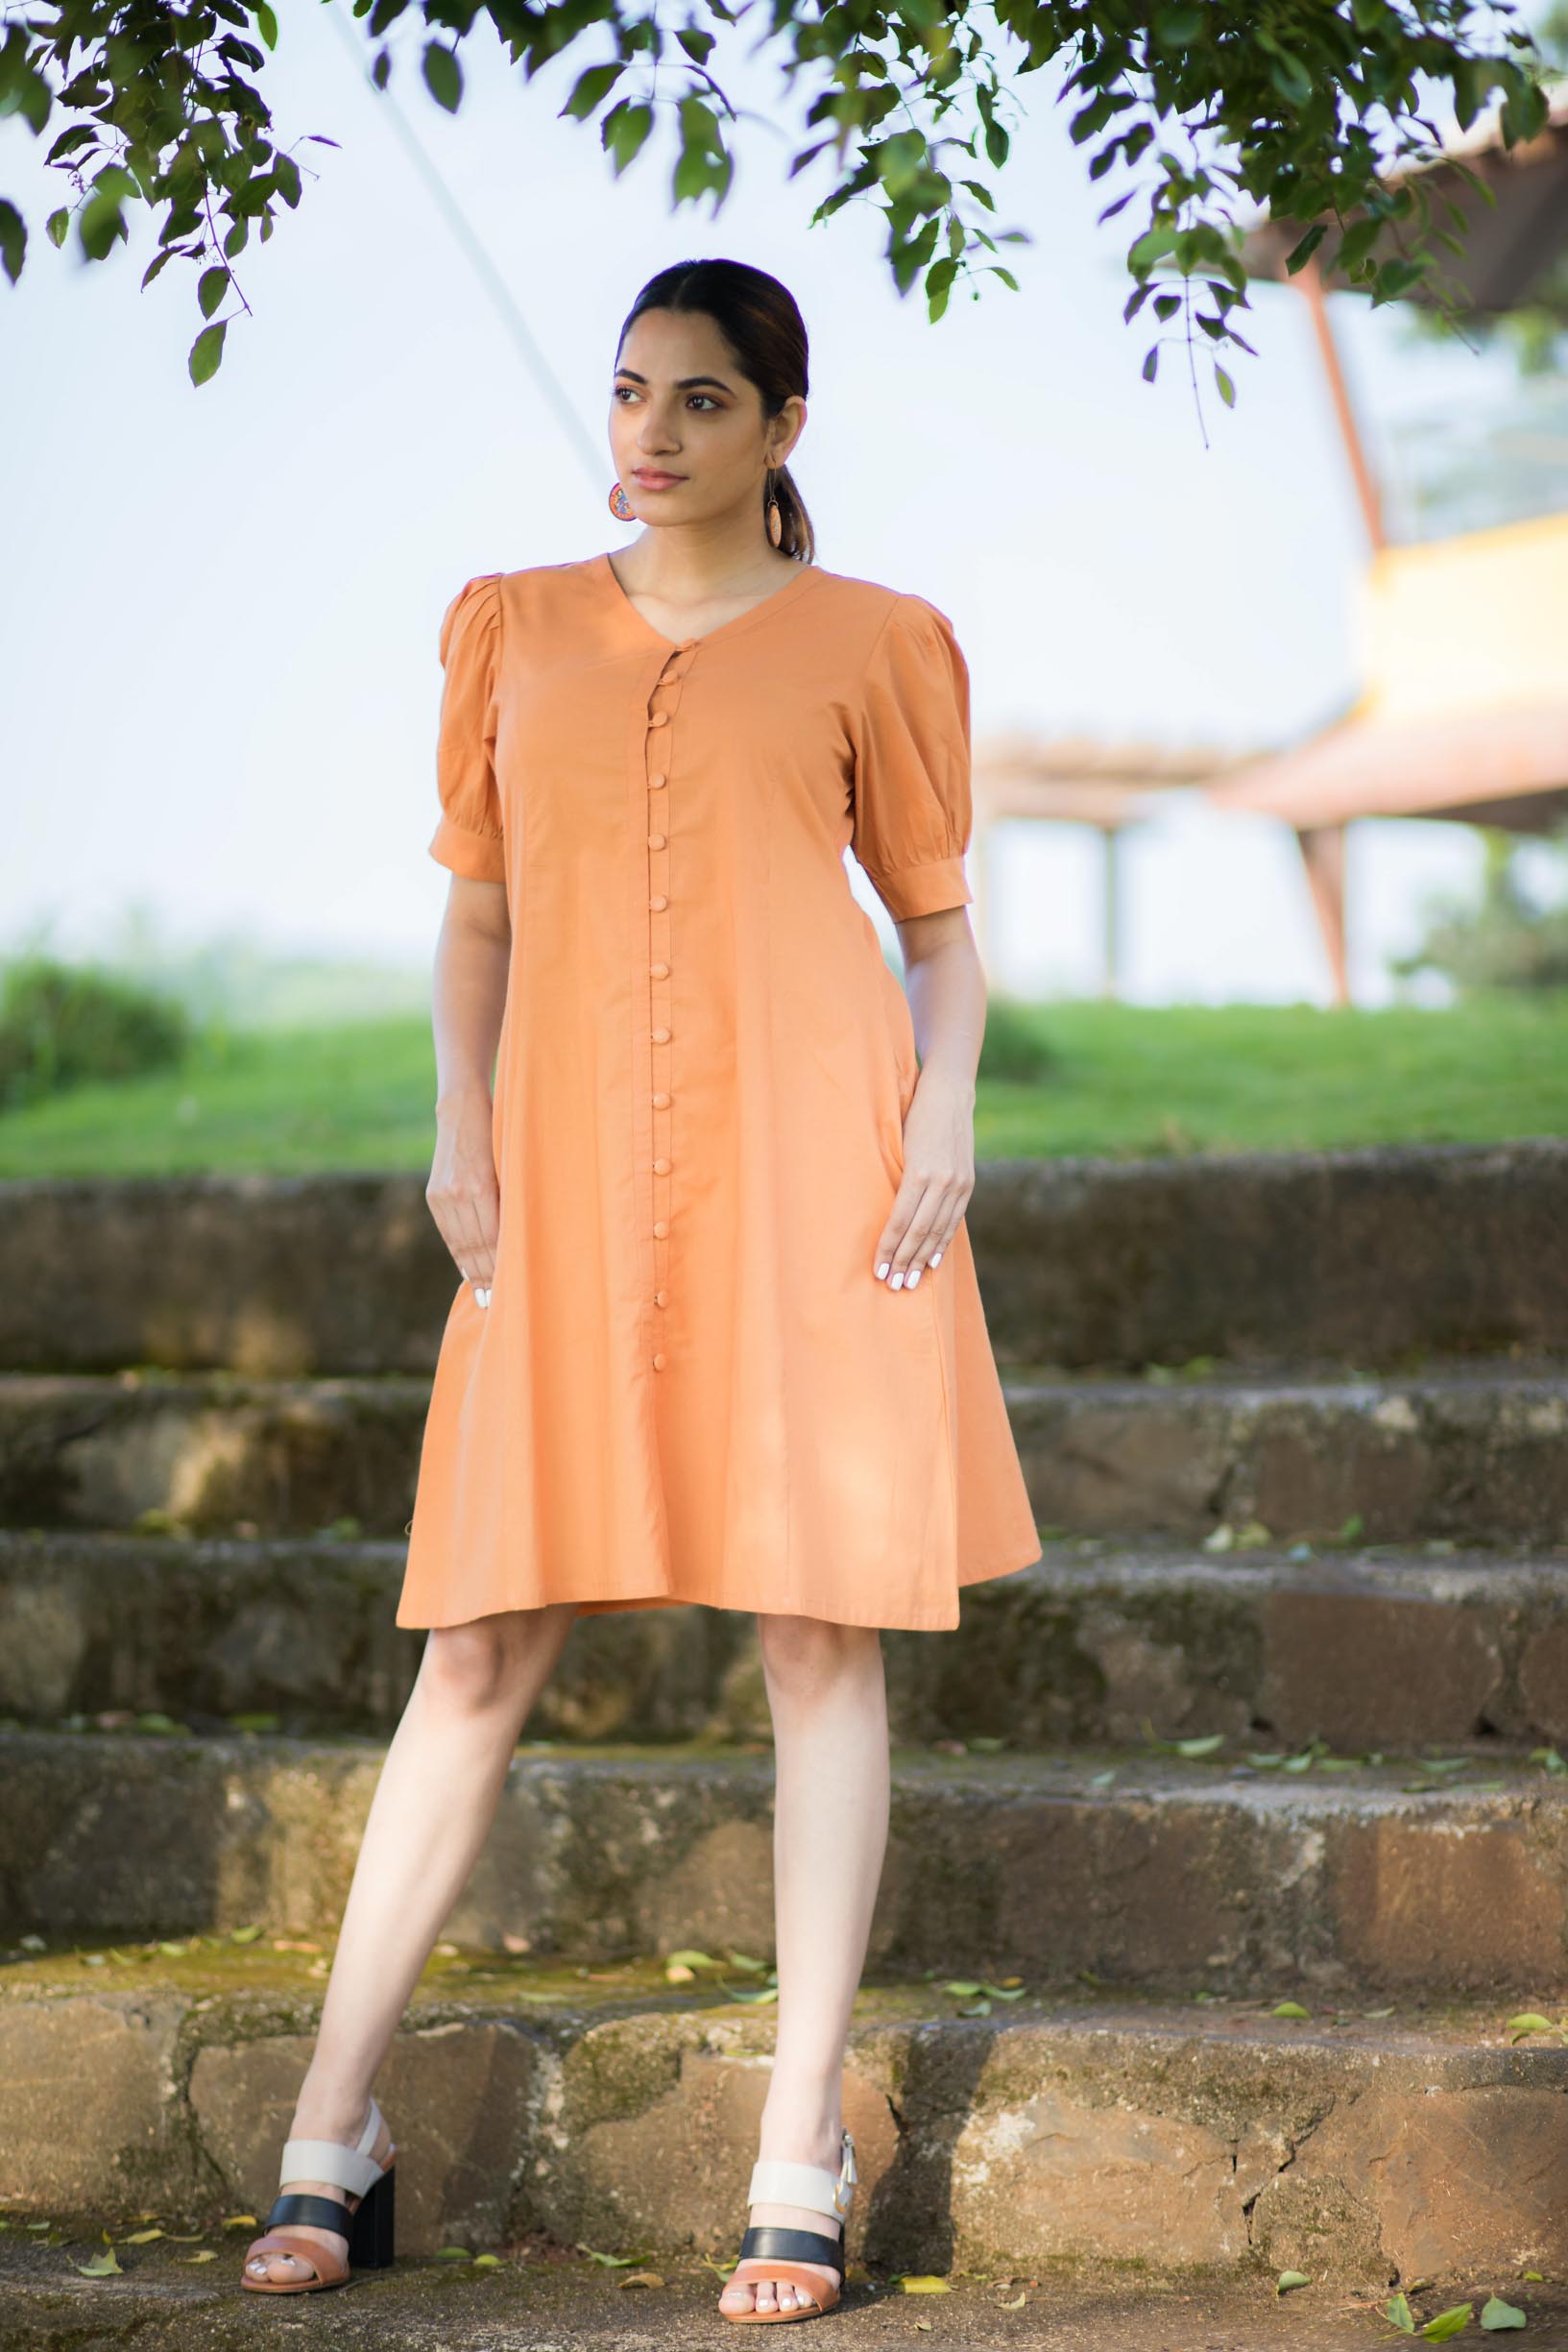 Empire Line Dresses - Buy Empire Line Dresses online in India